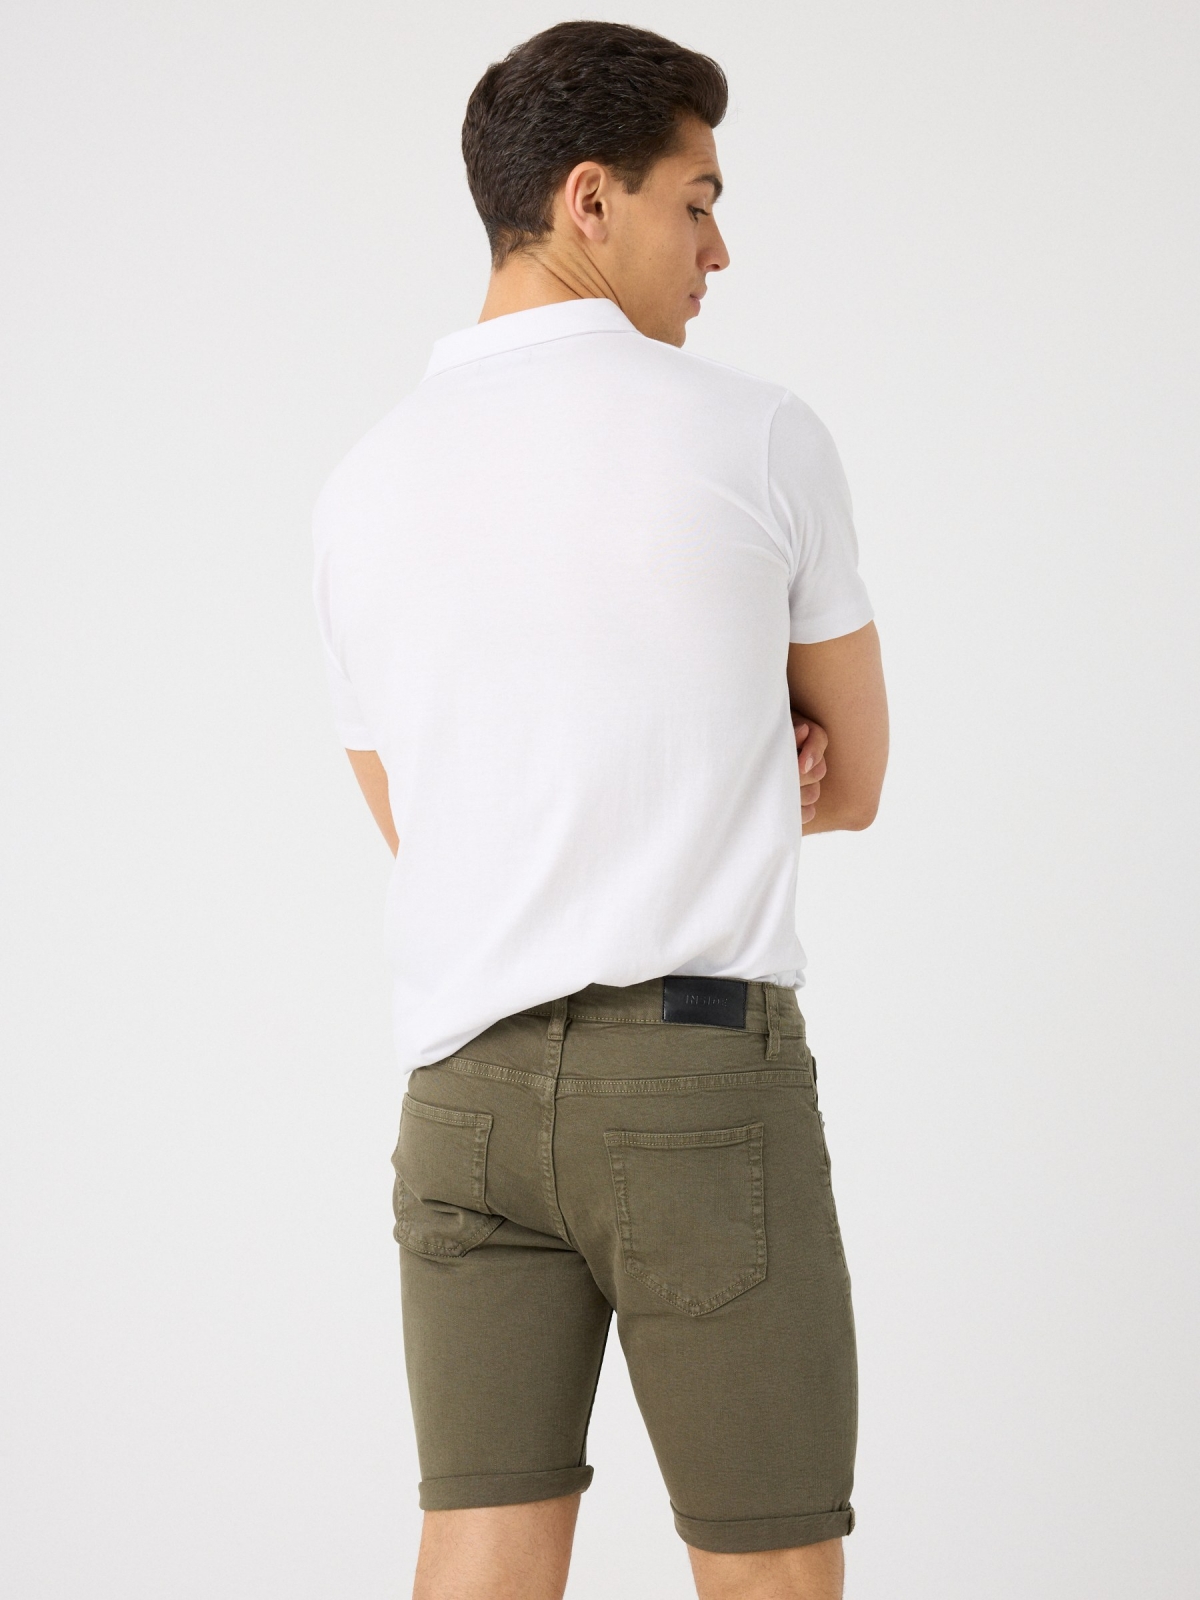 Coloured denim shorts khaki middle back view